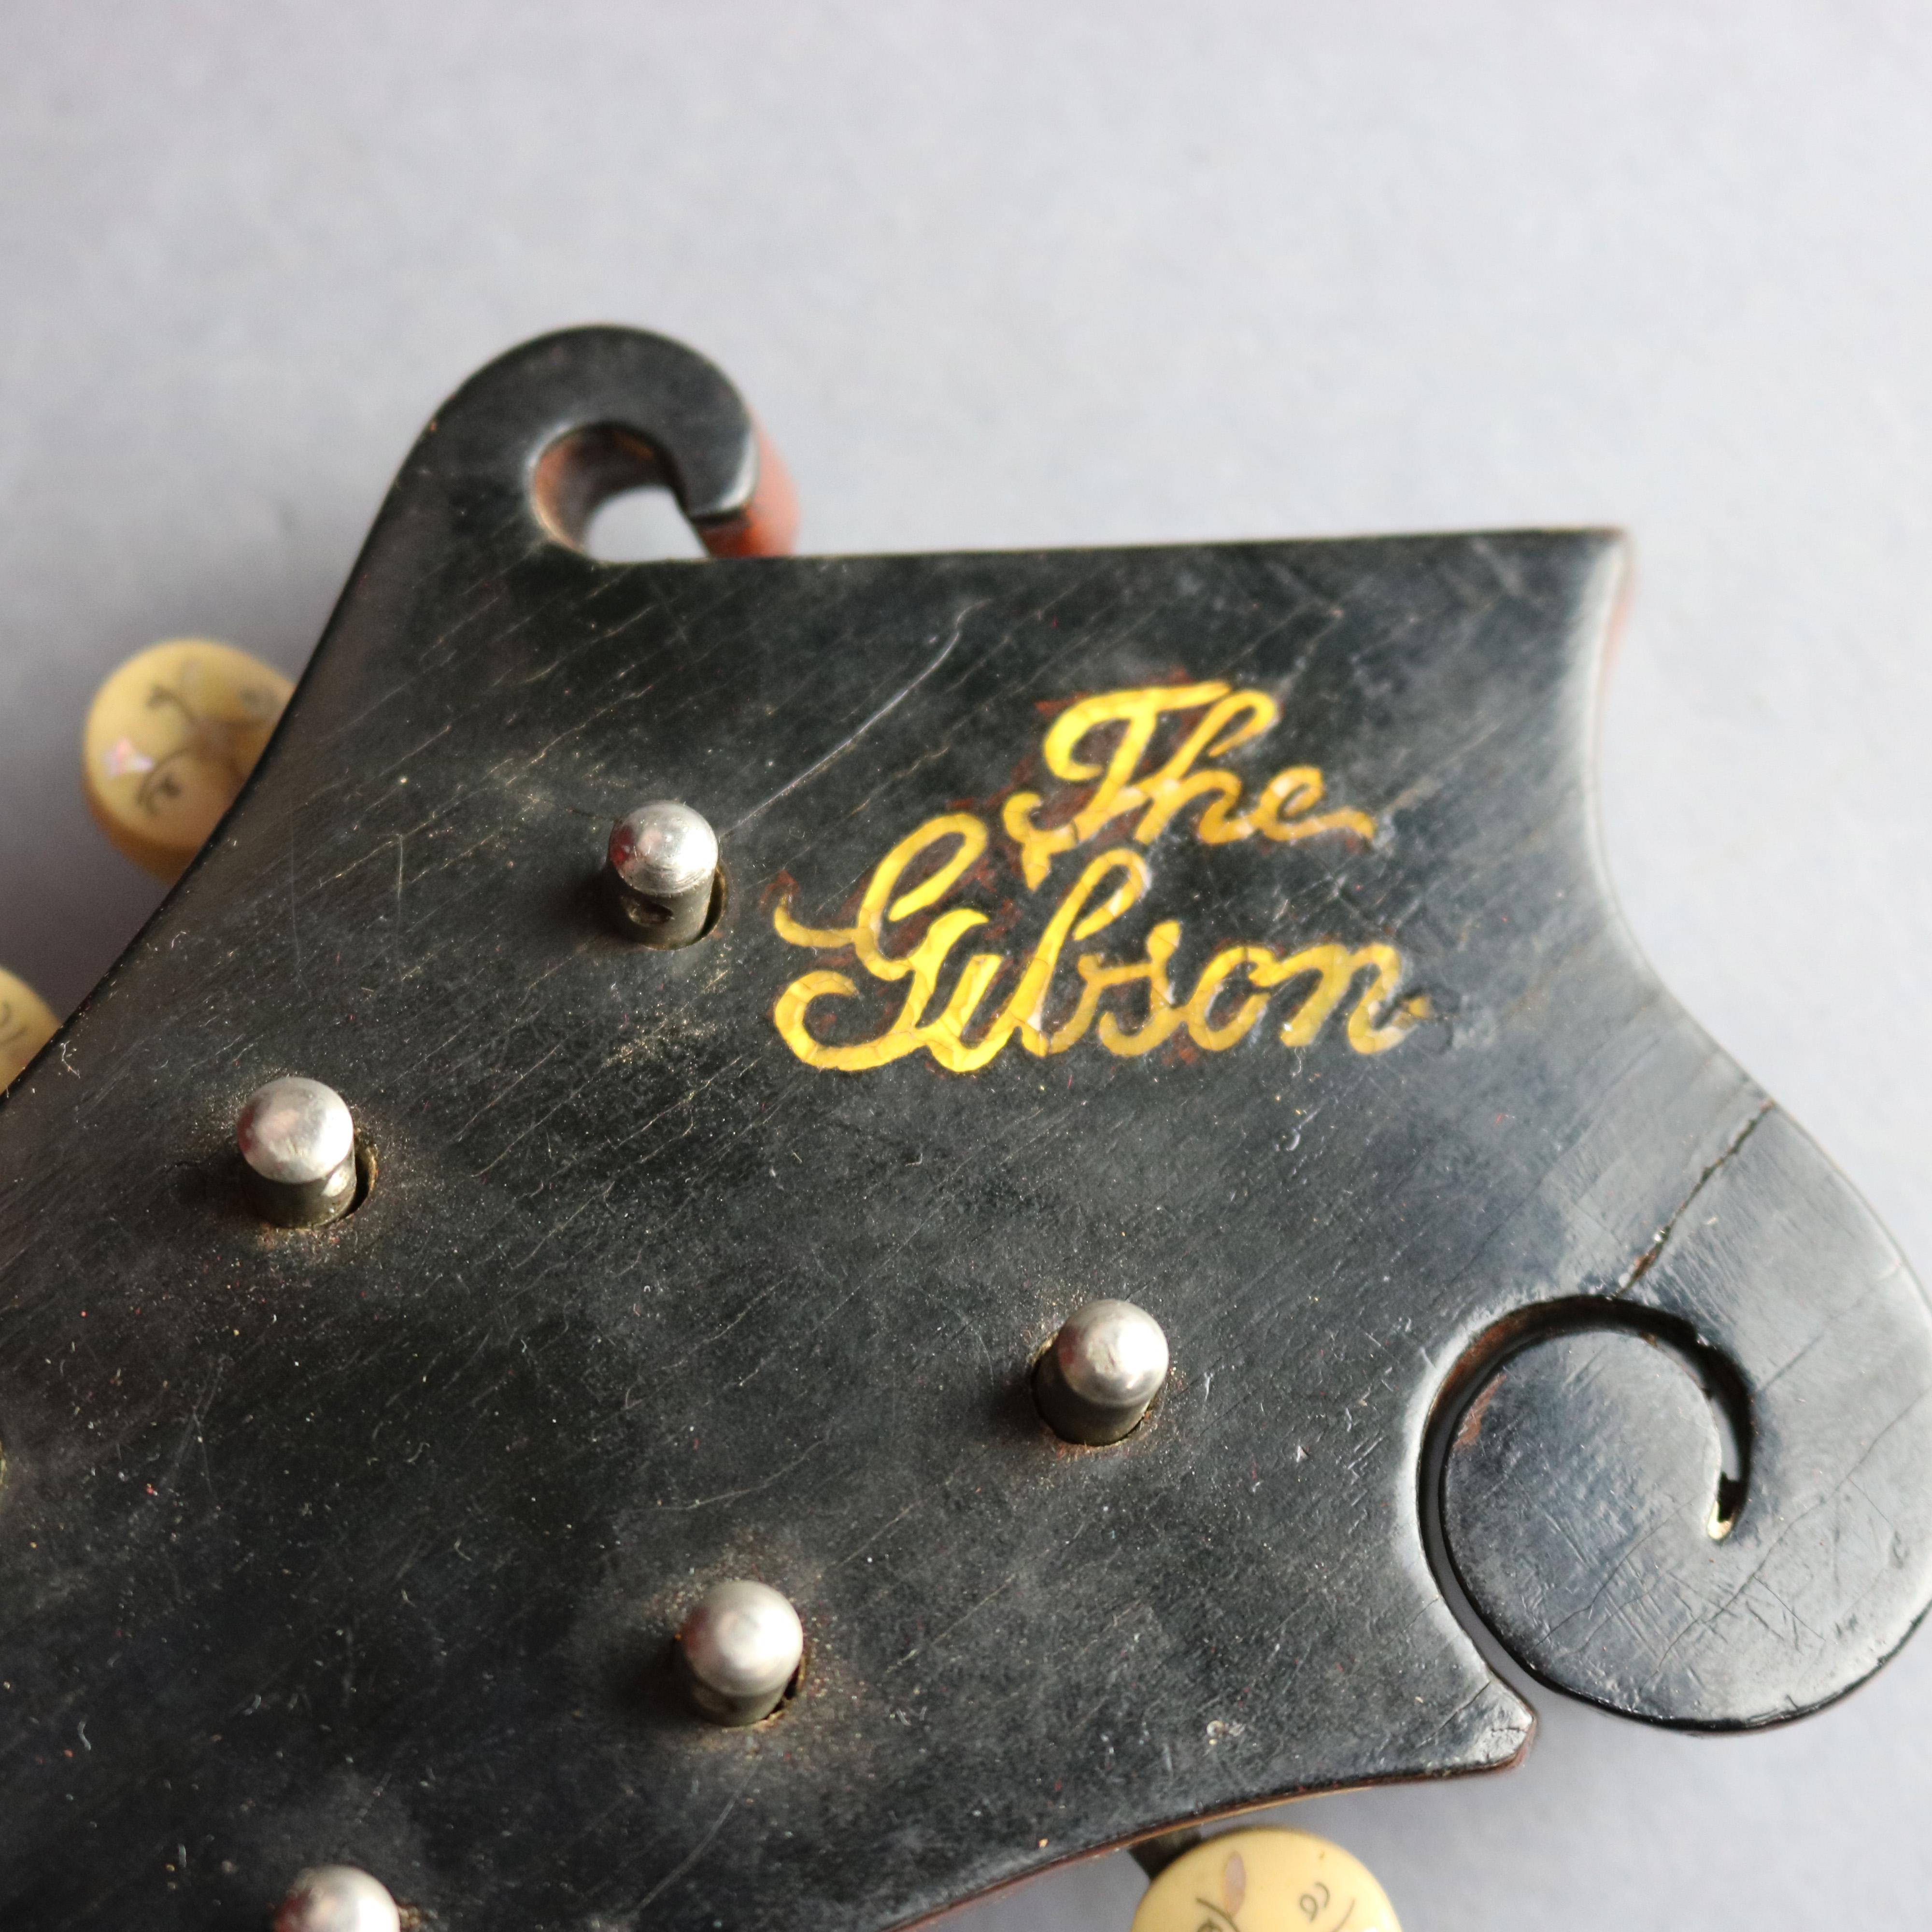 1920 gibson mandolin